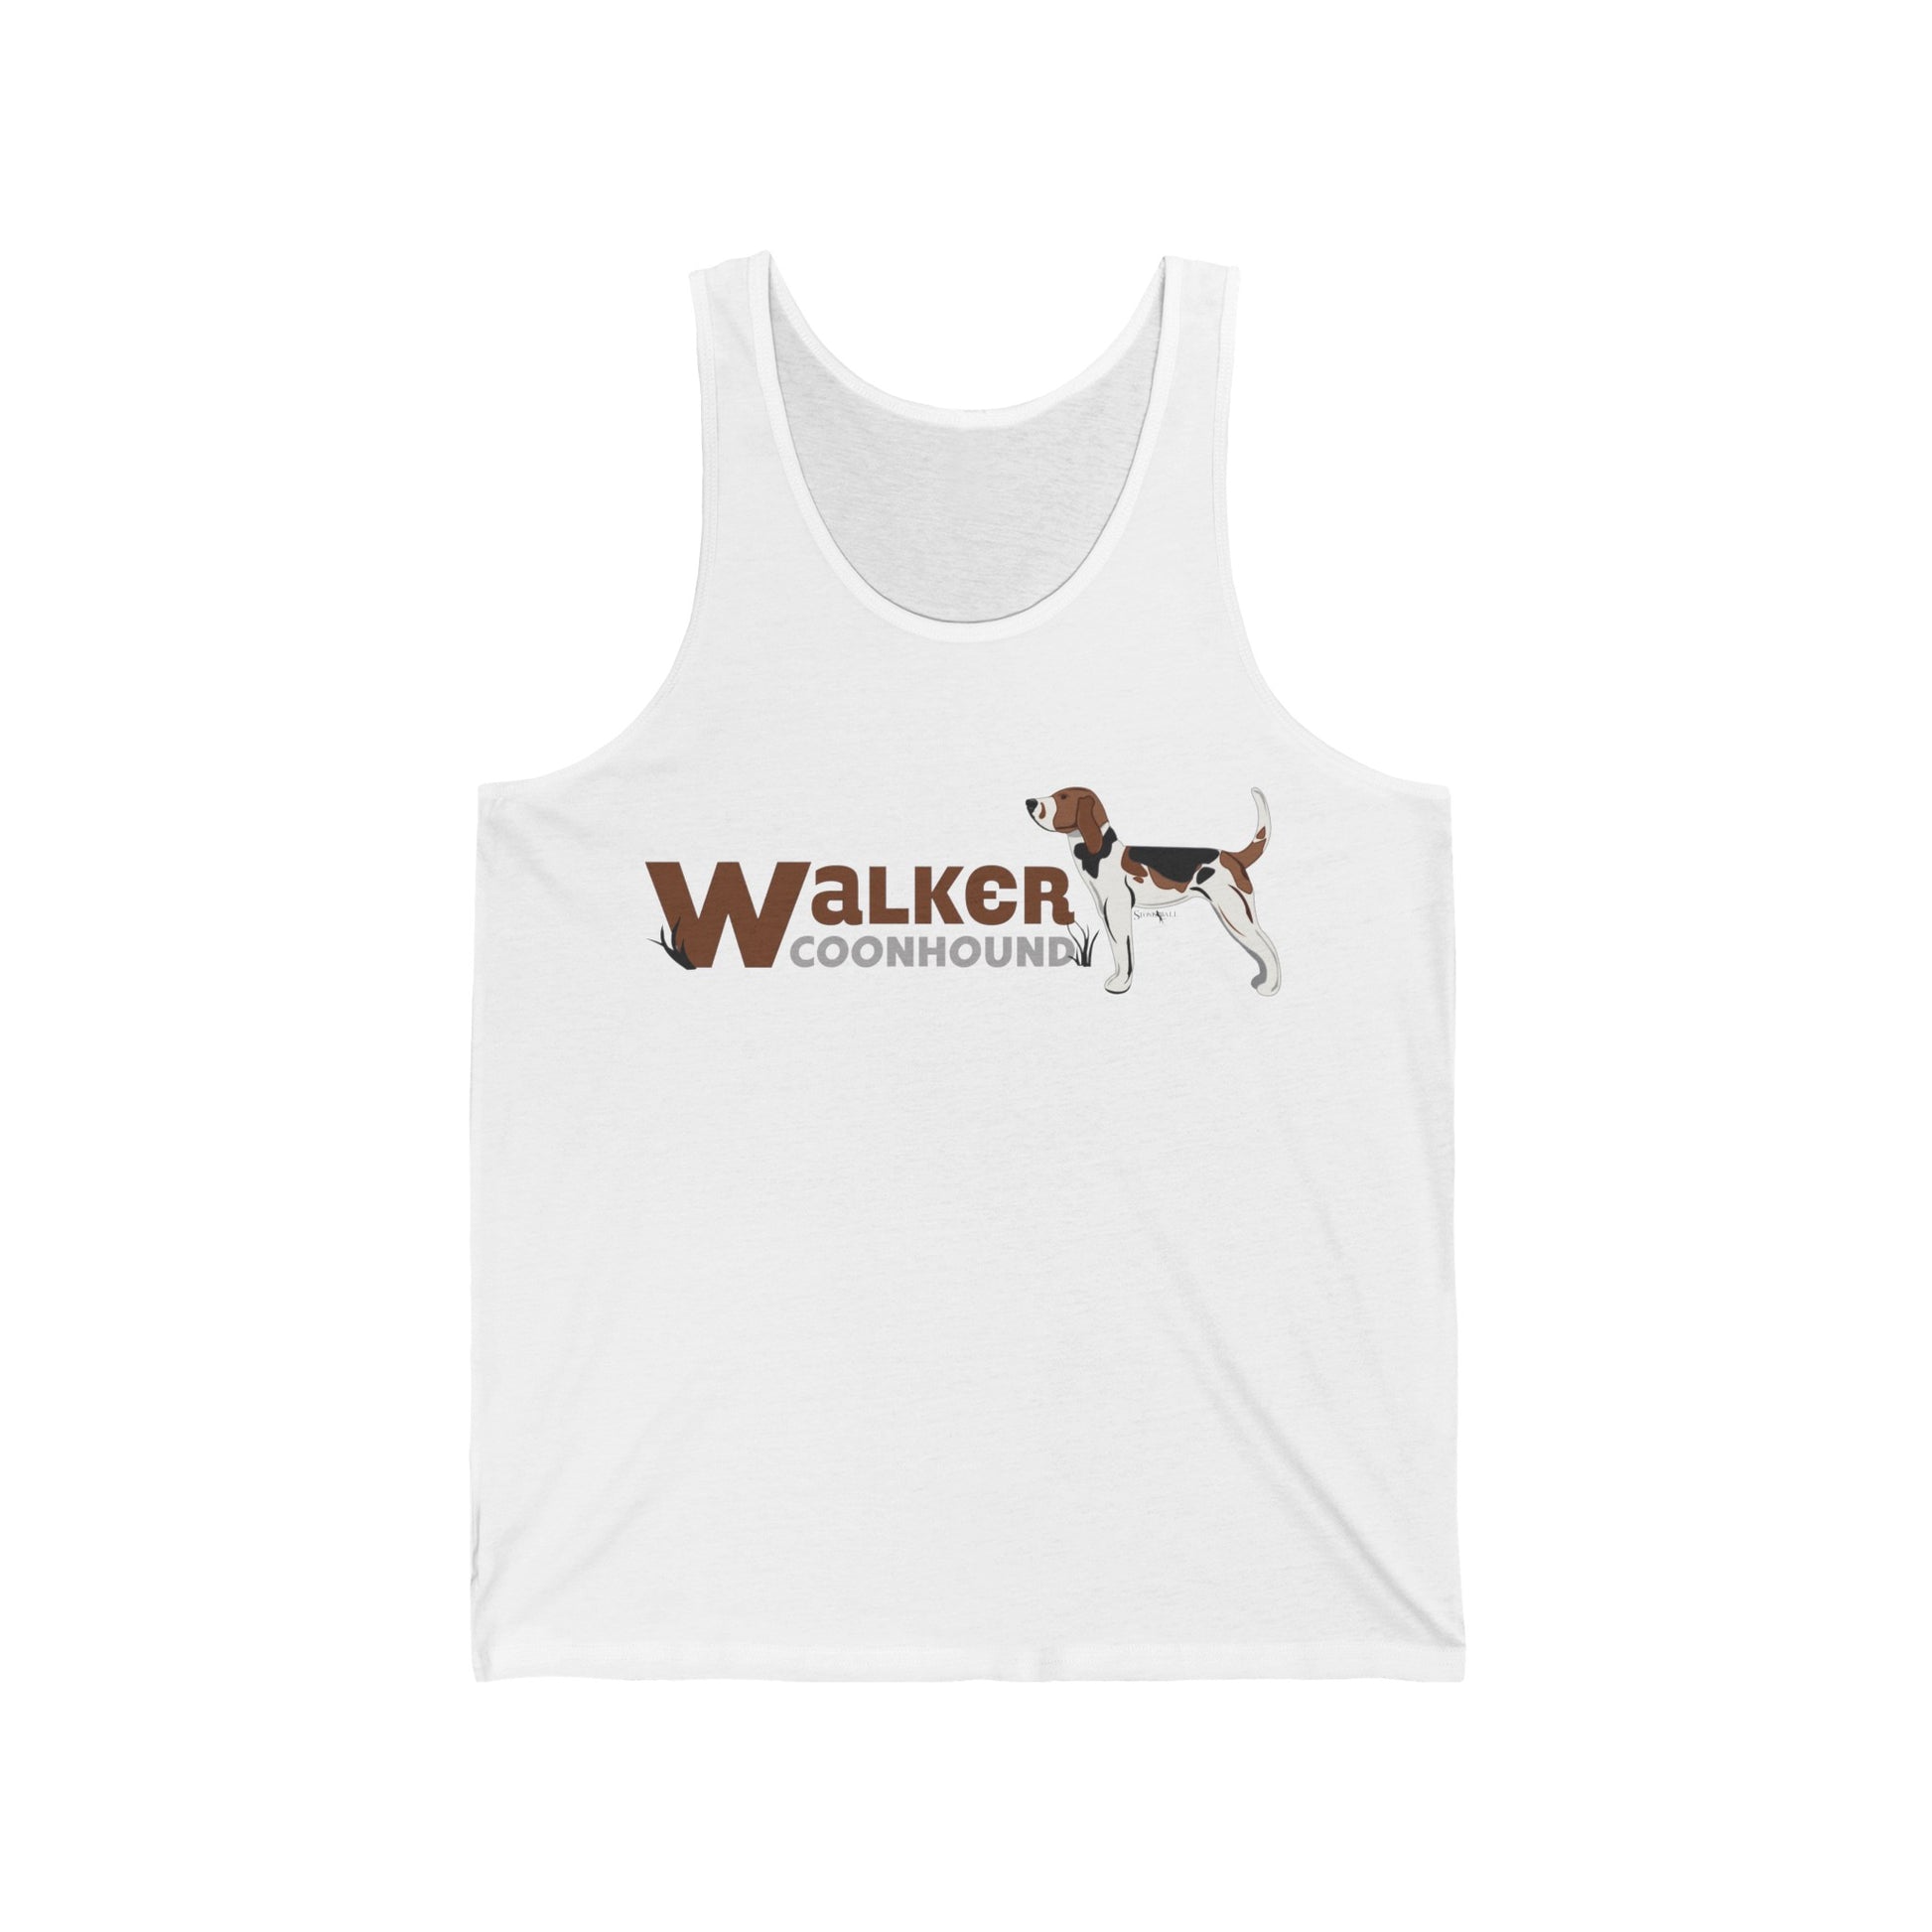 Treeing walker coonhound tank